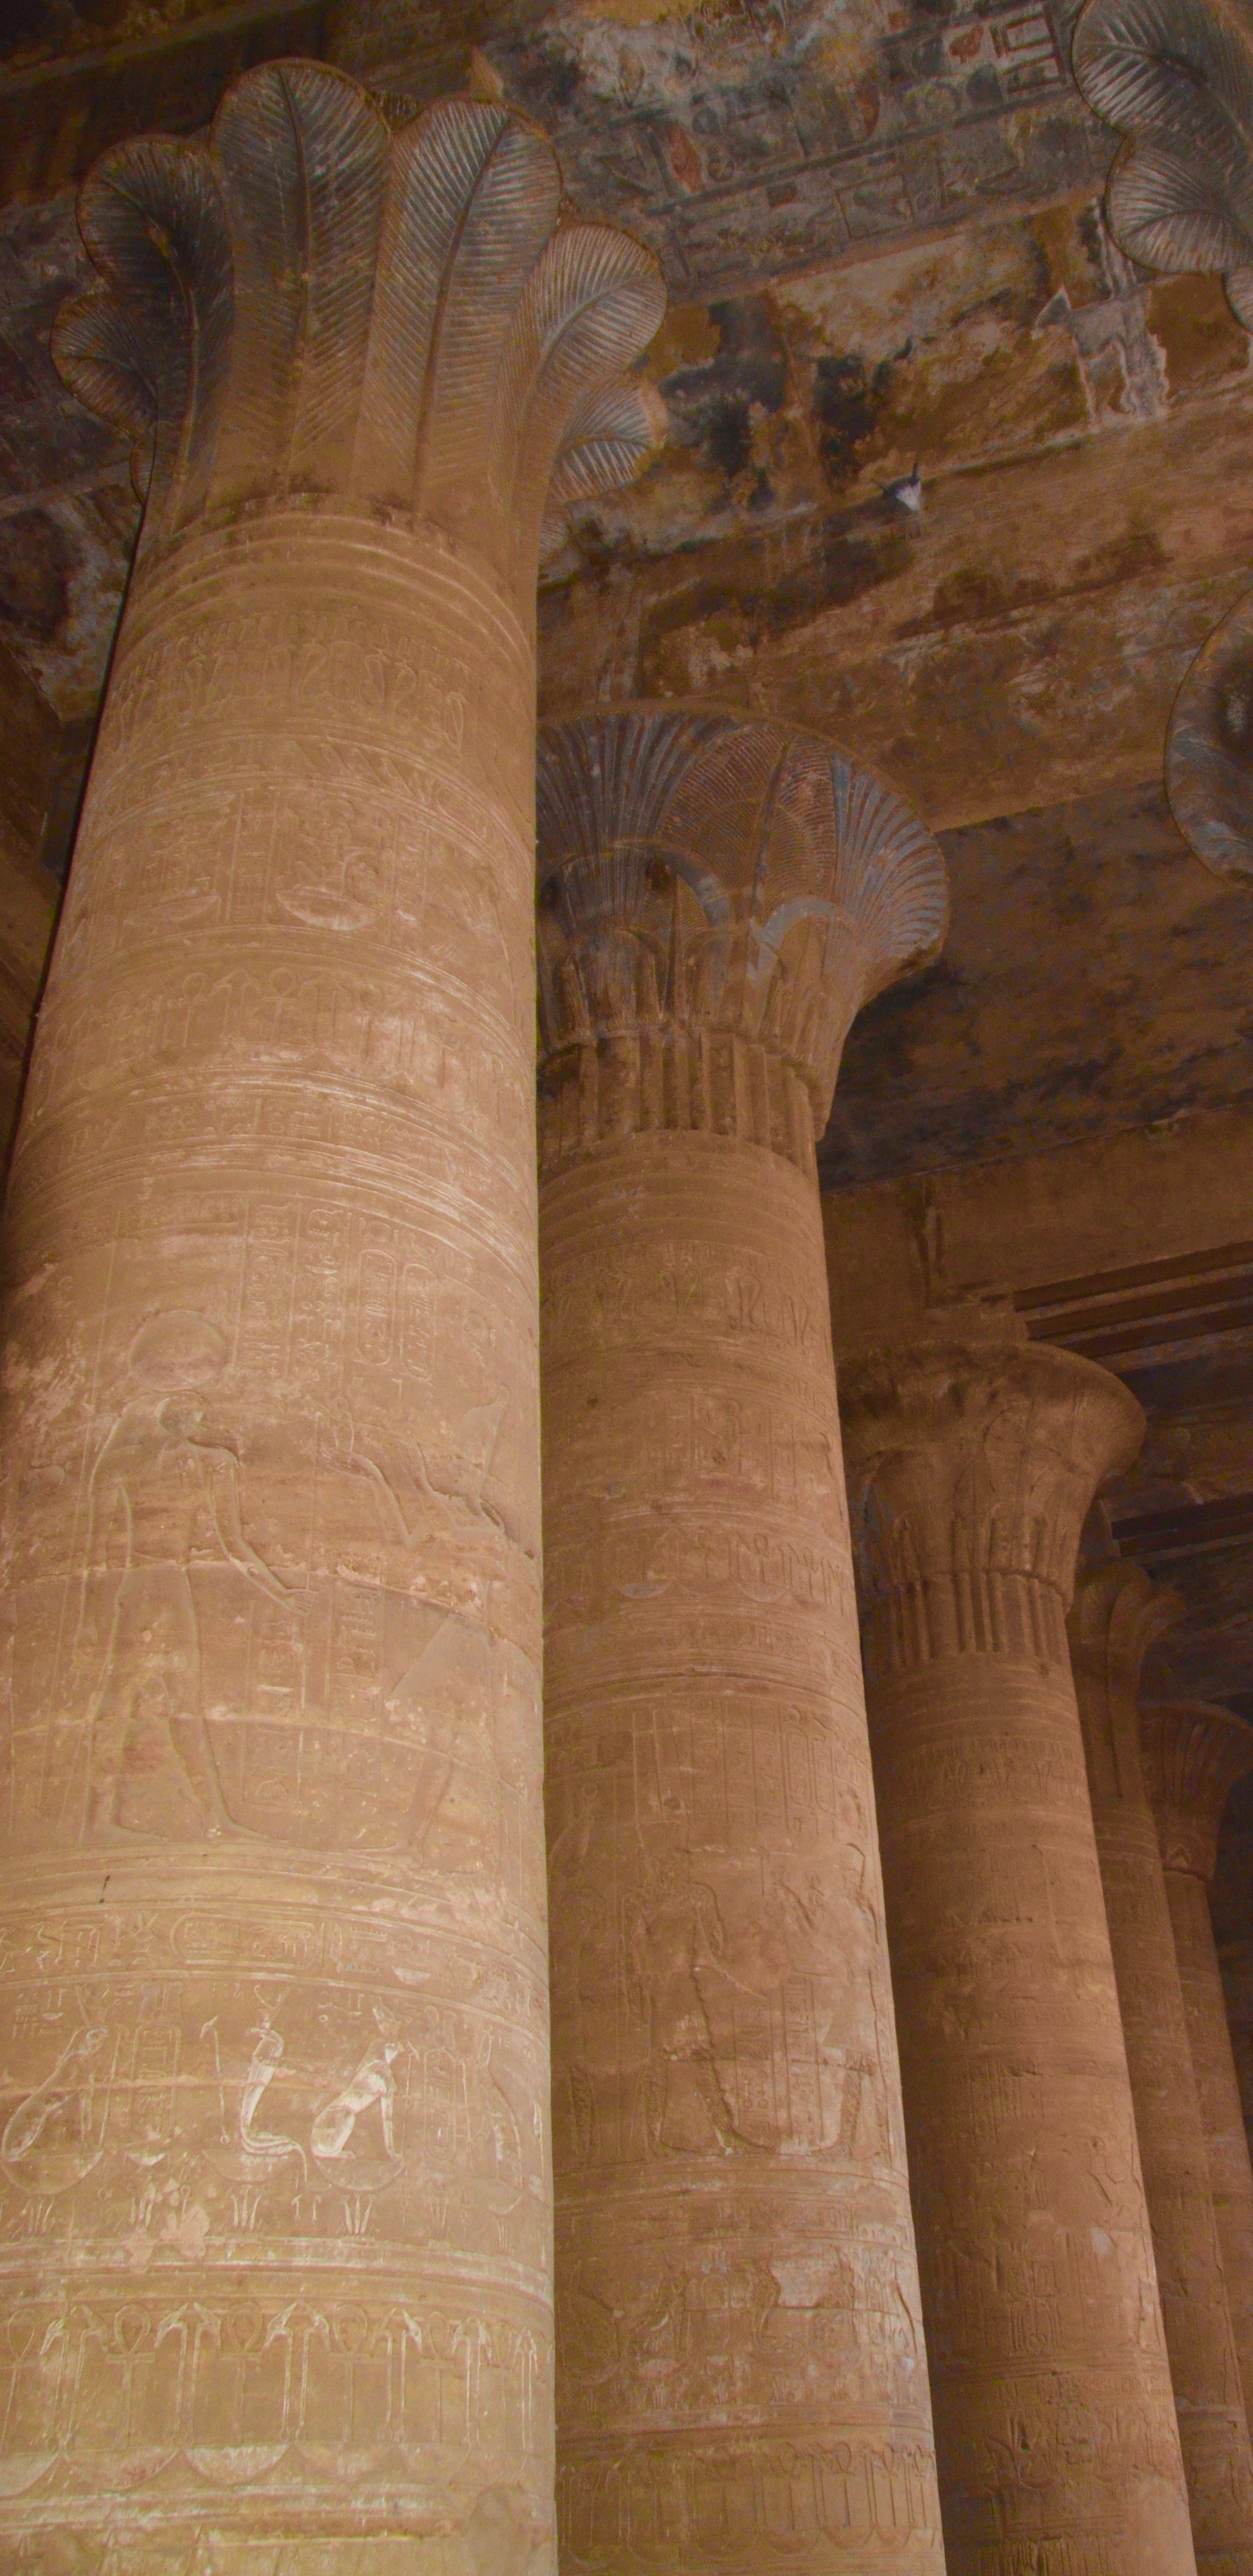 Massive Pillars, Edfu